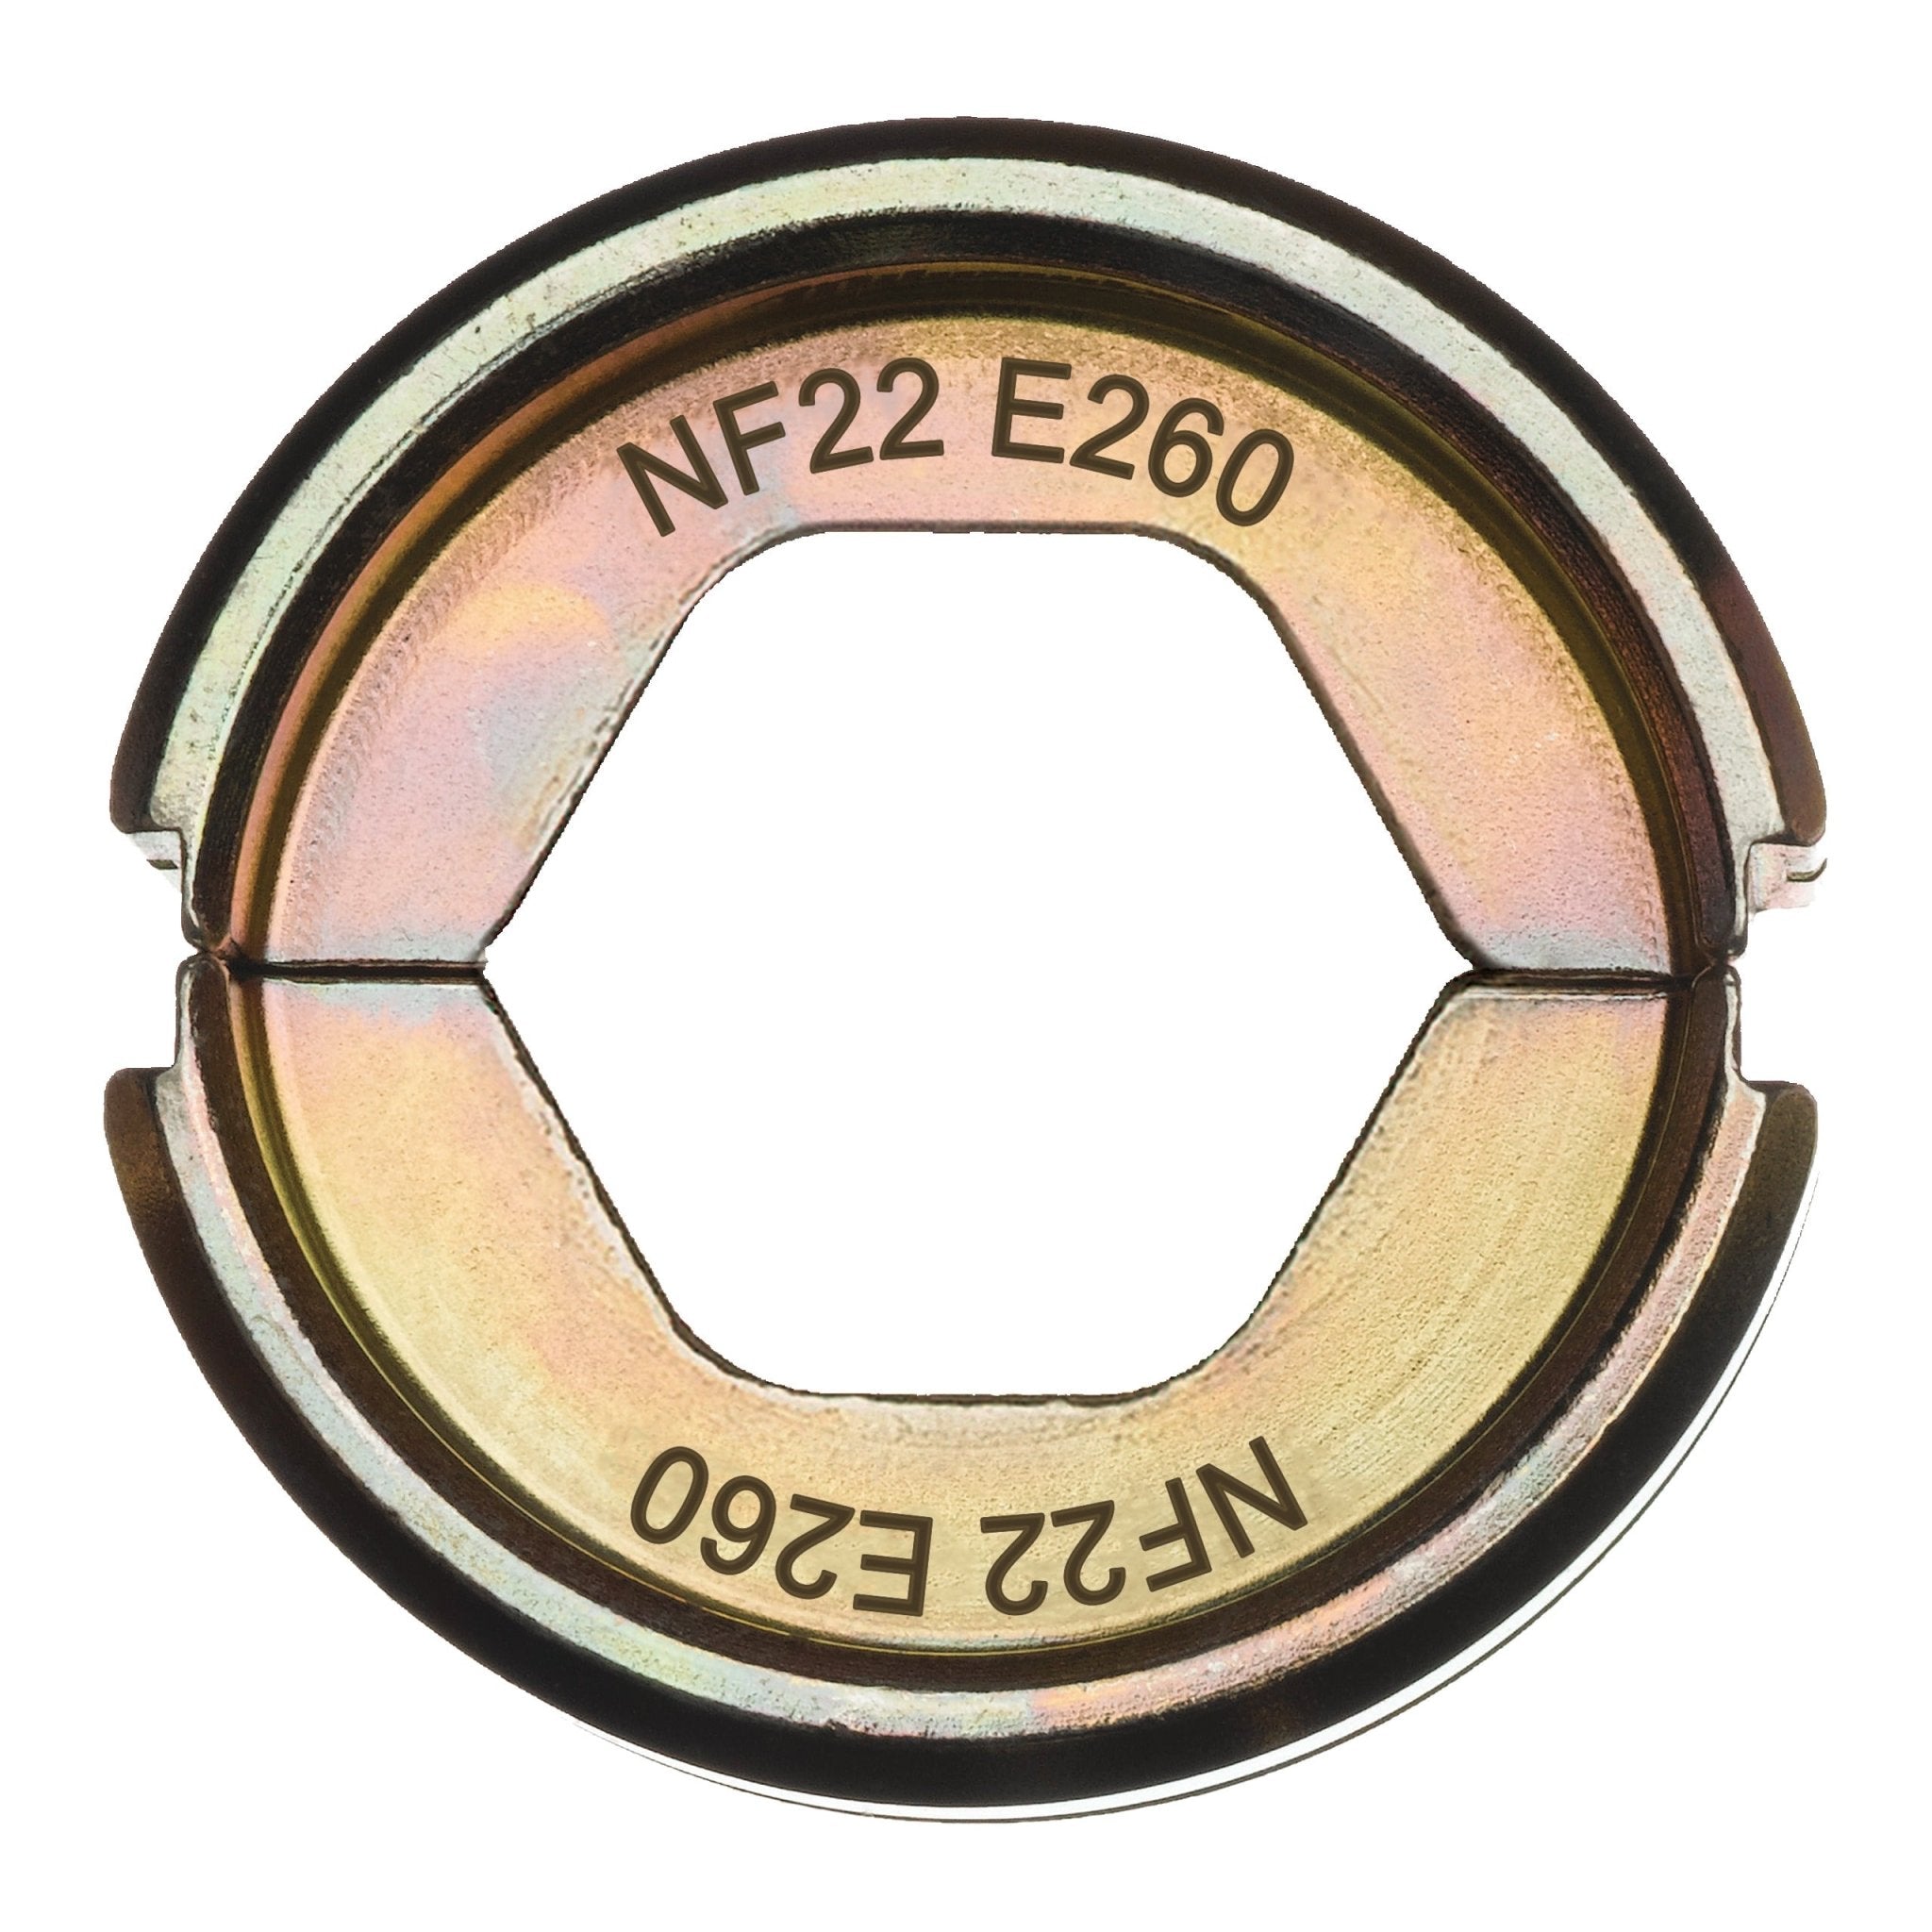 MATRICE POUR SERTISSEUSE FORCE LOGIC (ELECTRICITE) NF22 E260